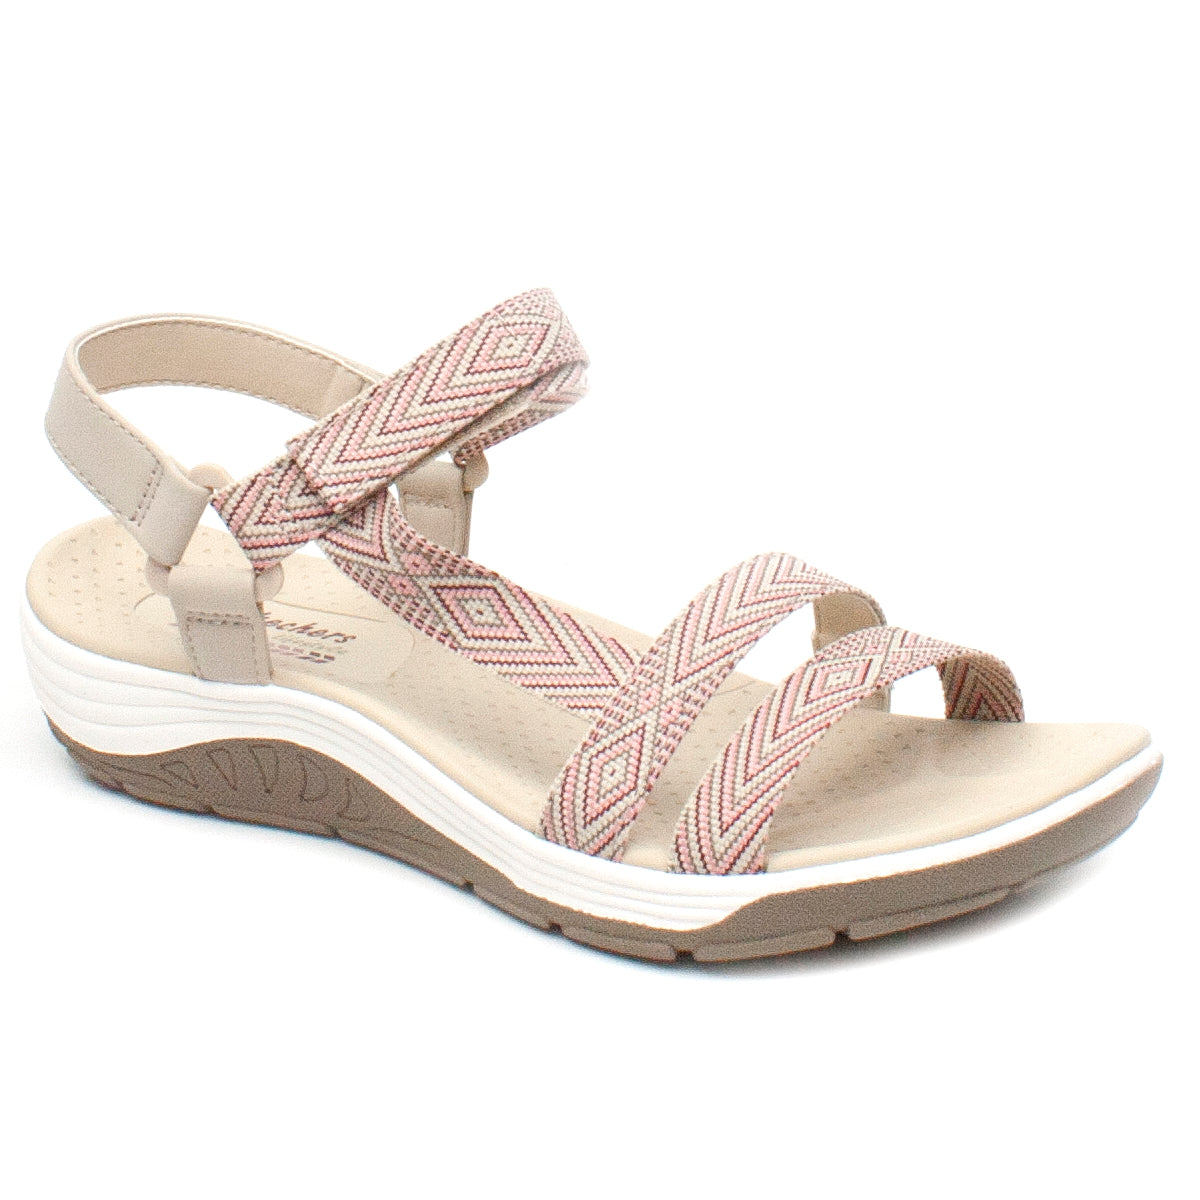 Skechers sandale dama 163126 bej ID3057-BEJ